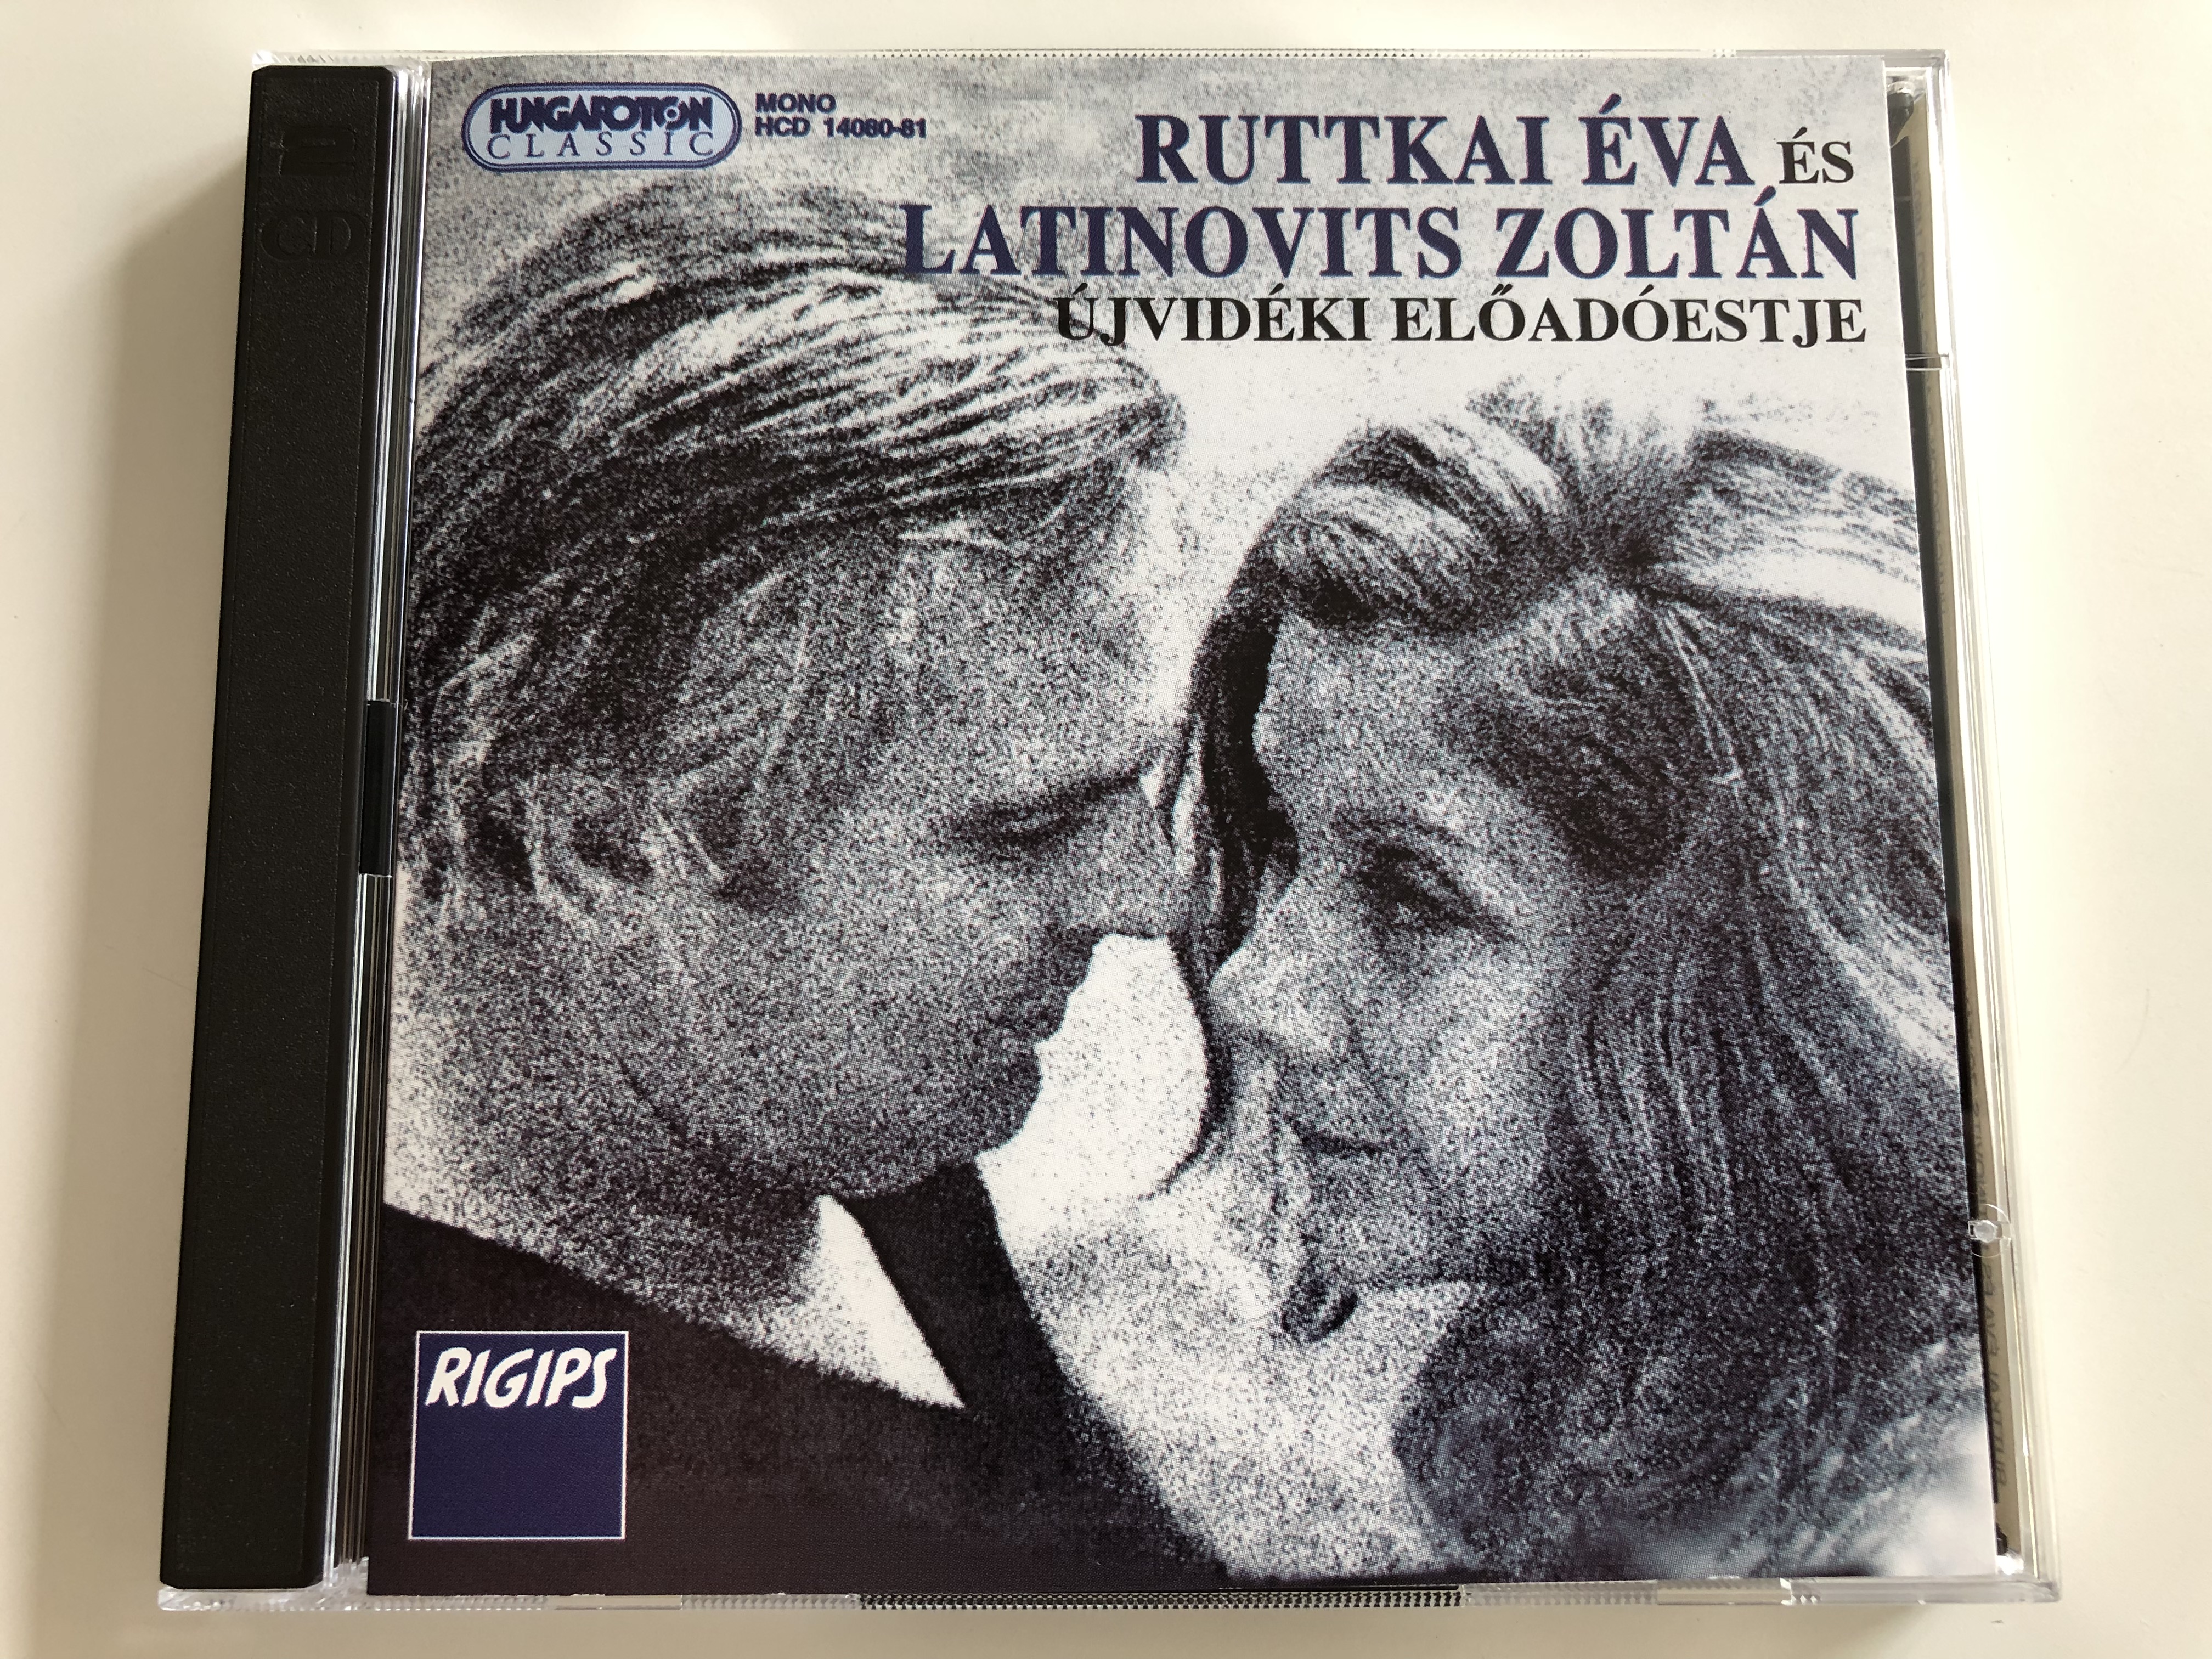 ruttkai-va-s-latinovits-zolt-n-jvid-ki-el-ad-estje-hungaroton-classic-audio-cd-1995-hcd-14080-81-2x-audio-cd-1-.jpg